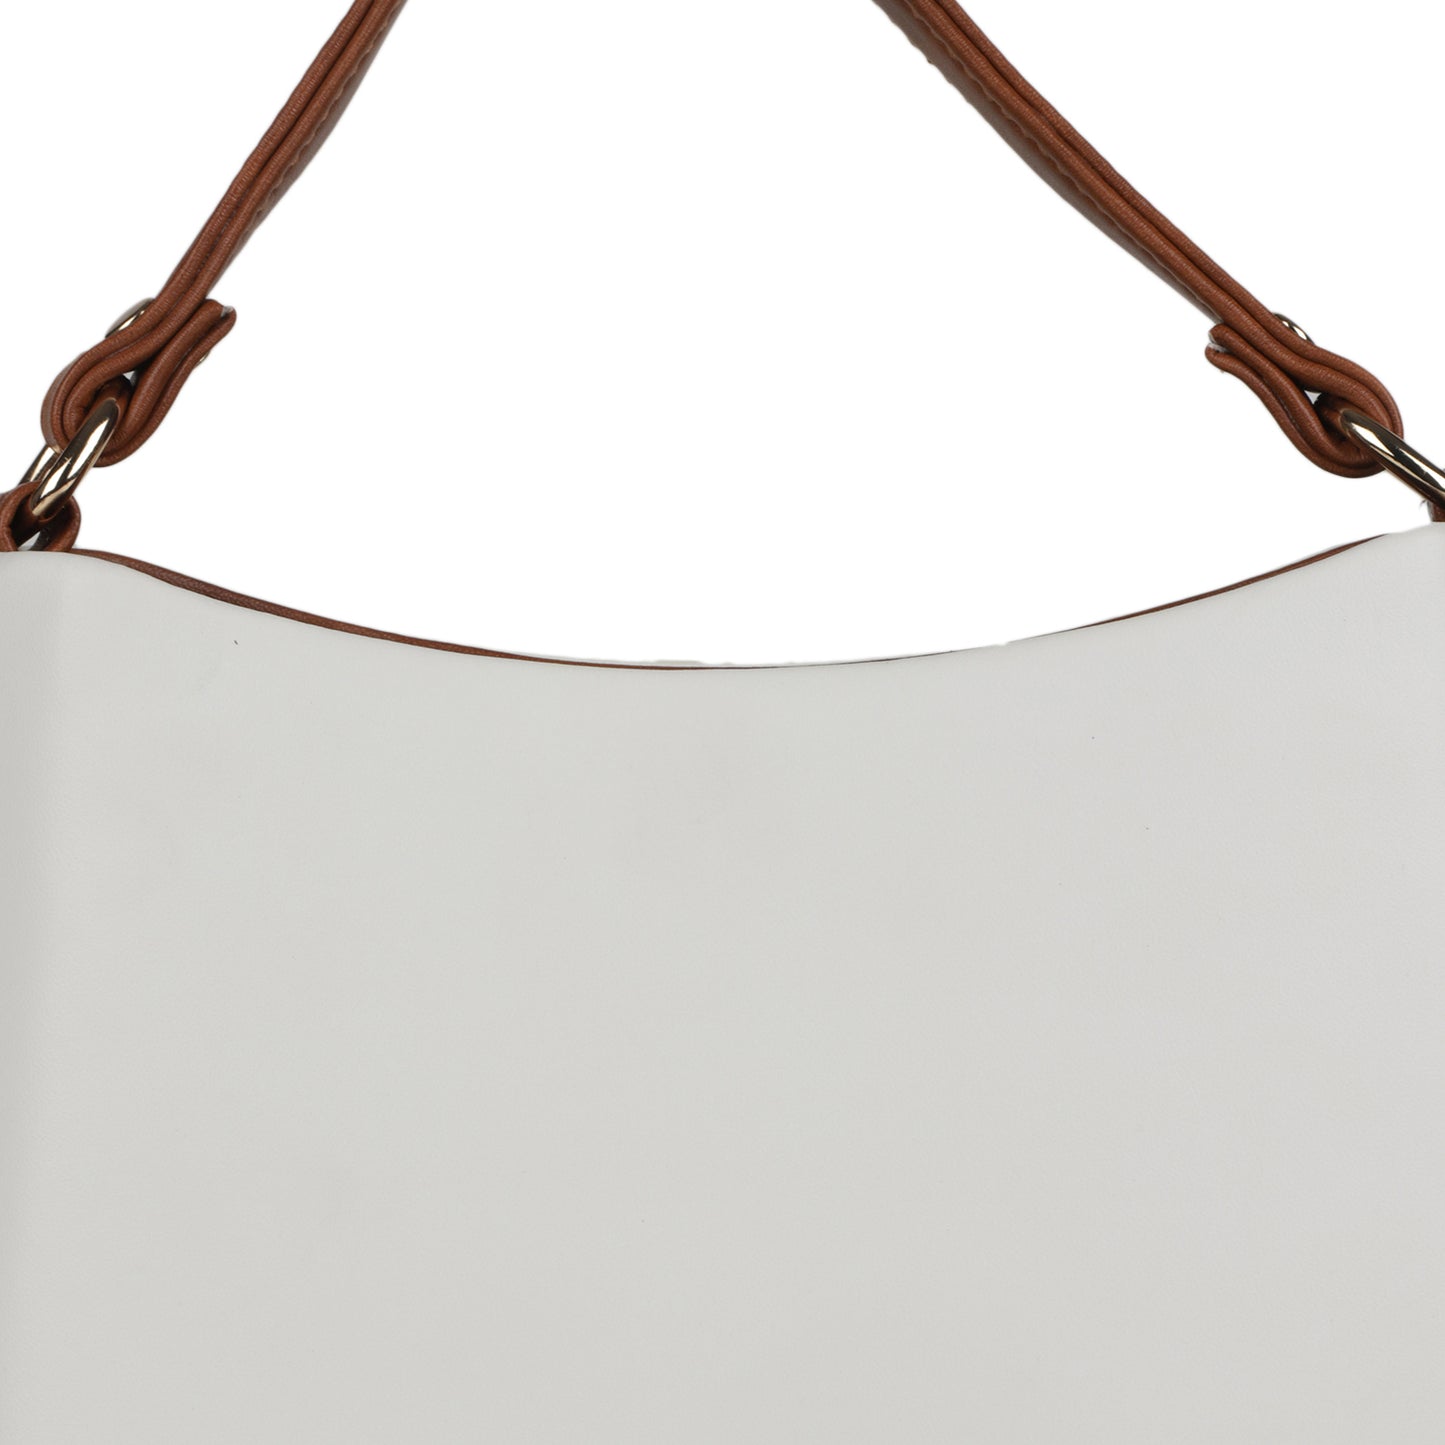 MINI WESST Women's White Handbags(MWHB086WT)